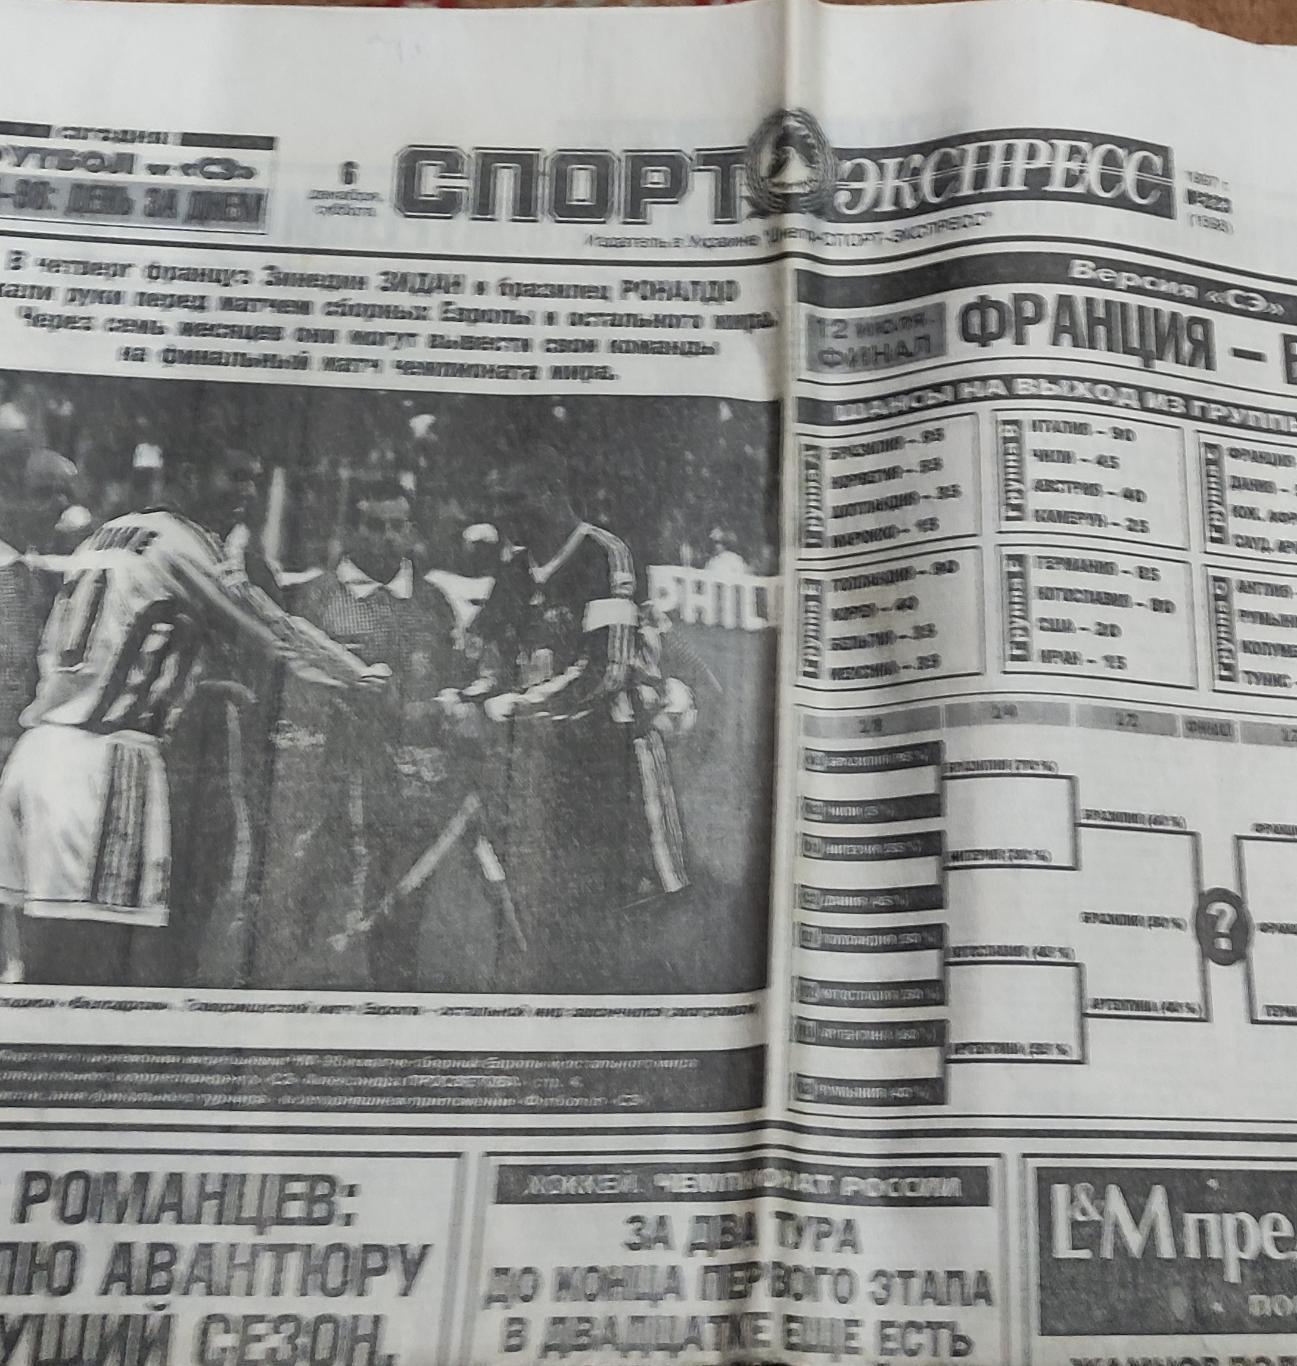 Спорт -Экспресс. 1997. 6.12